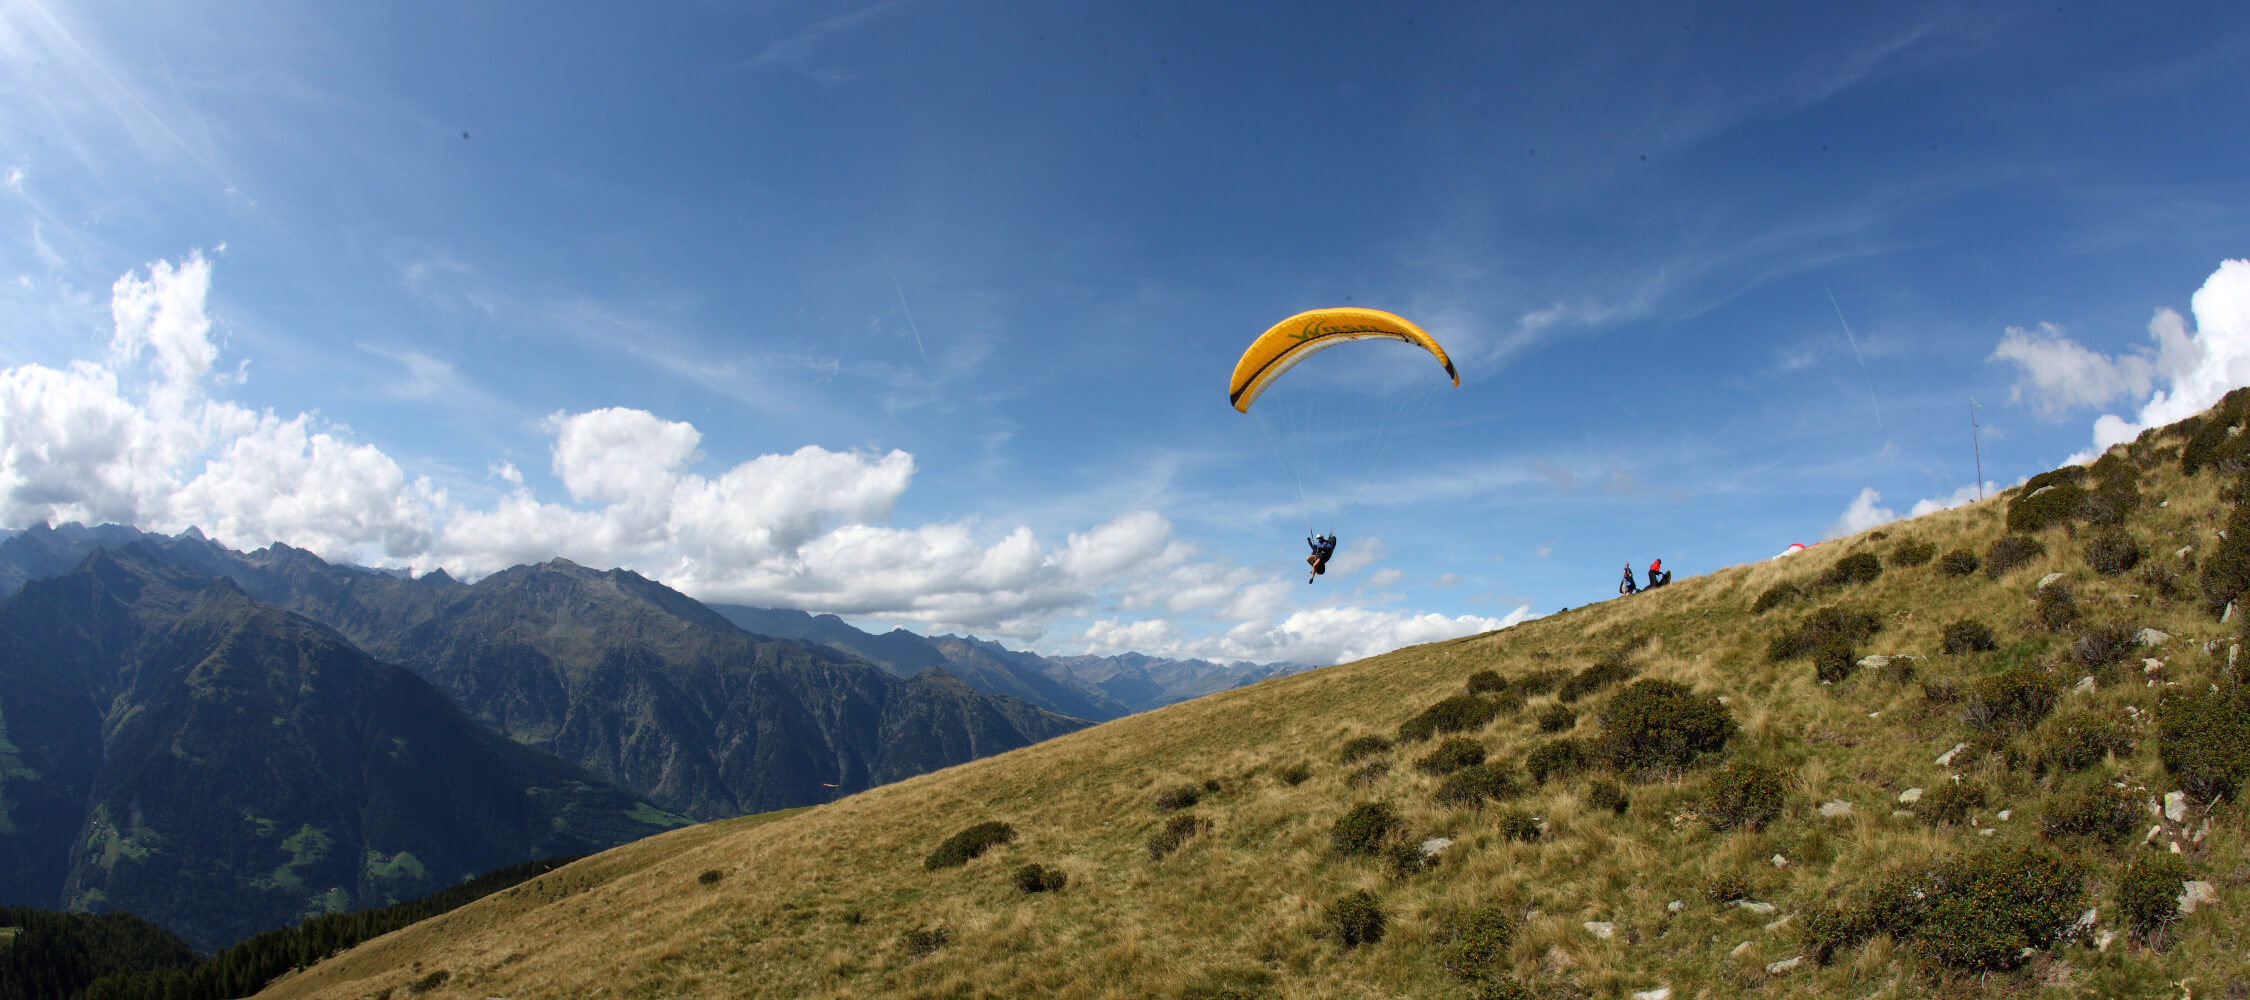 Italien-Trentino_Suedtirol_Alto_Adige_Merano_Meran_Natur_Sport_Paragliden_Fliegen_Tandem_Berge_MGM-Mario- Entero_mgm00279maen_2250x1000